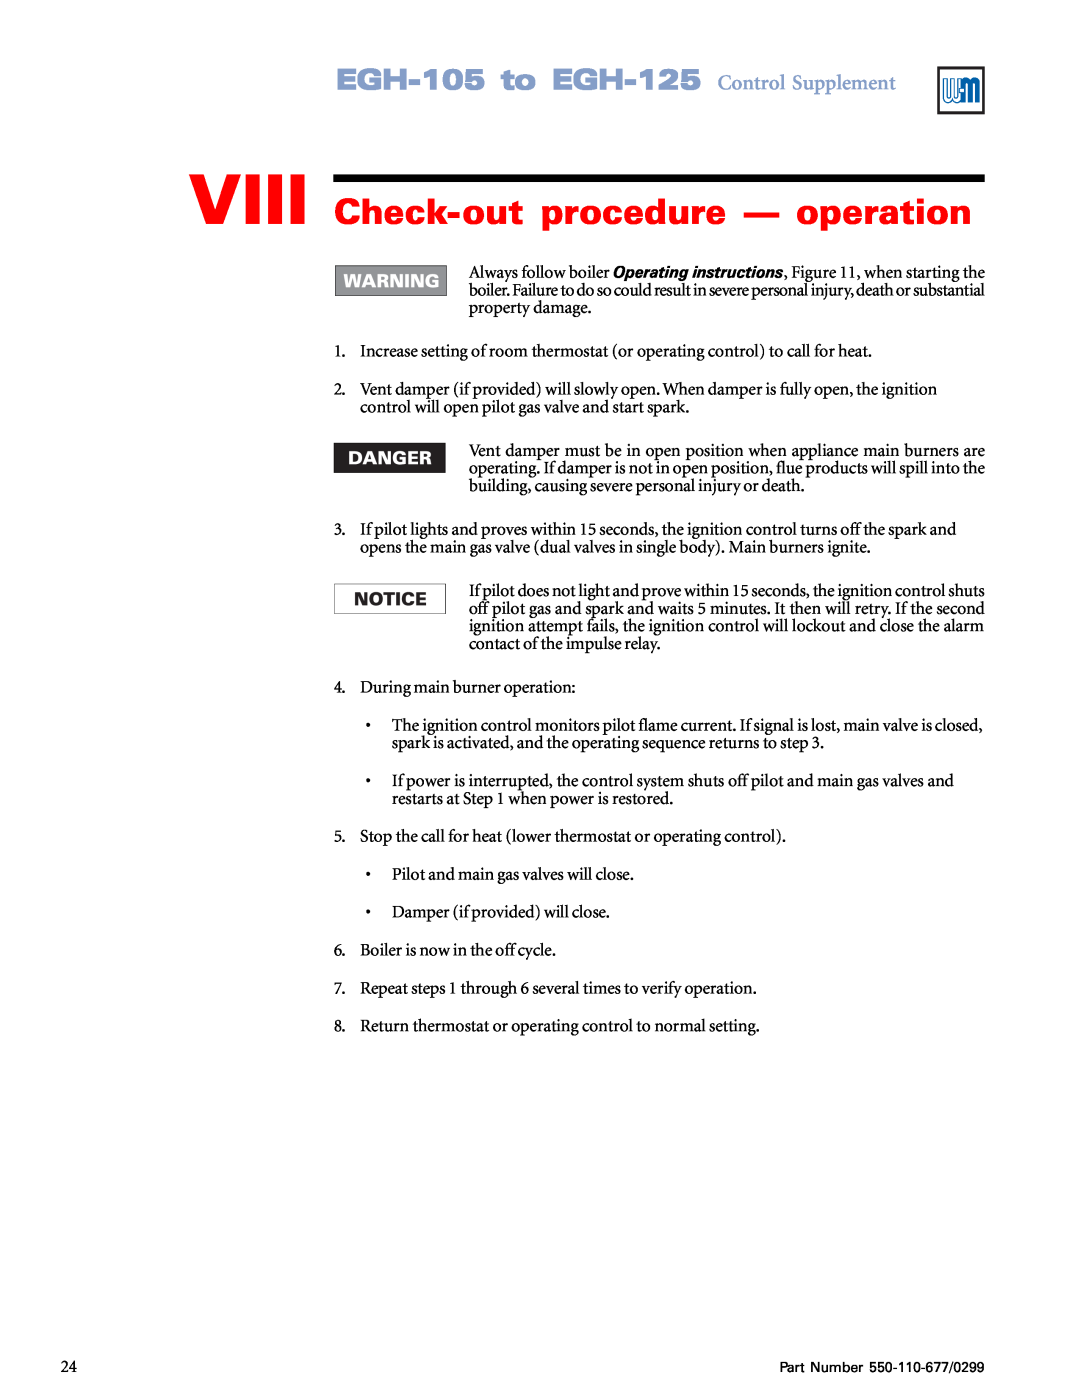 Weil-McLain manual VIII Check-outprocedure - operation, EGH-105to EGH-125 Control Supplement 